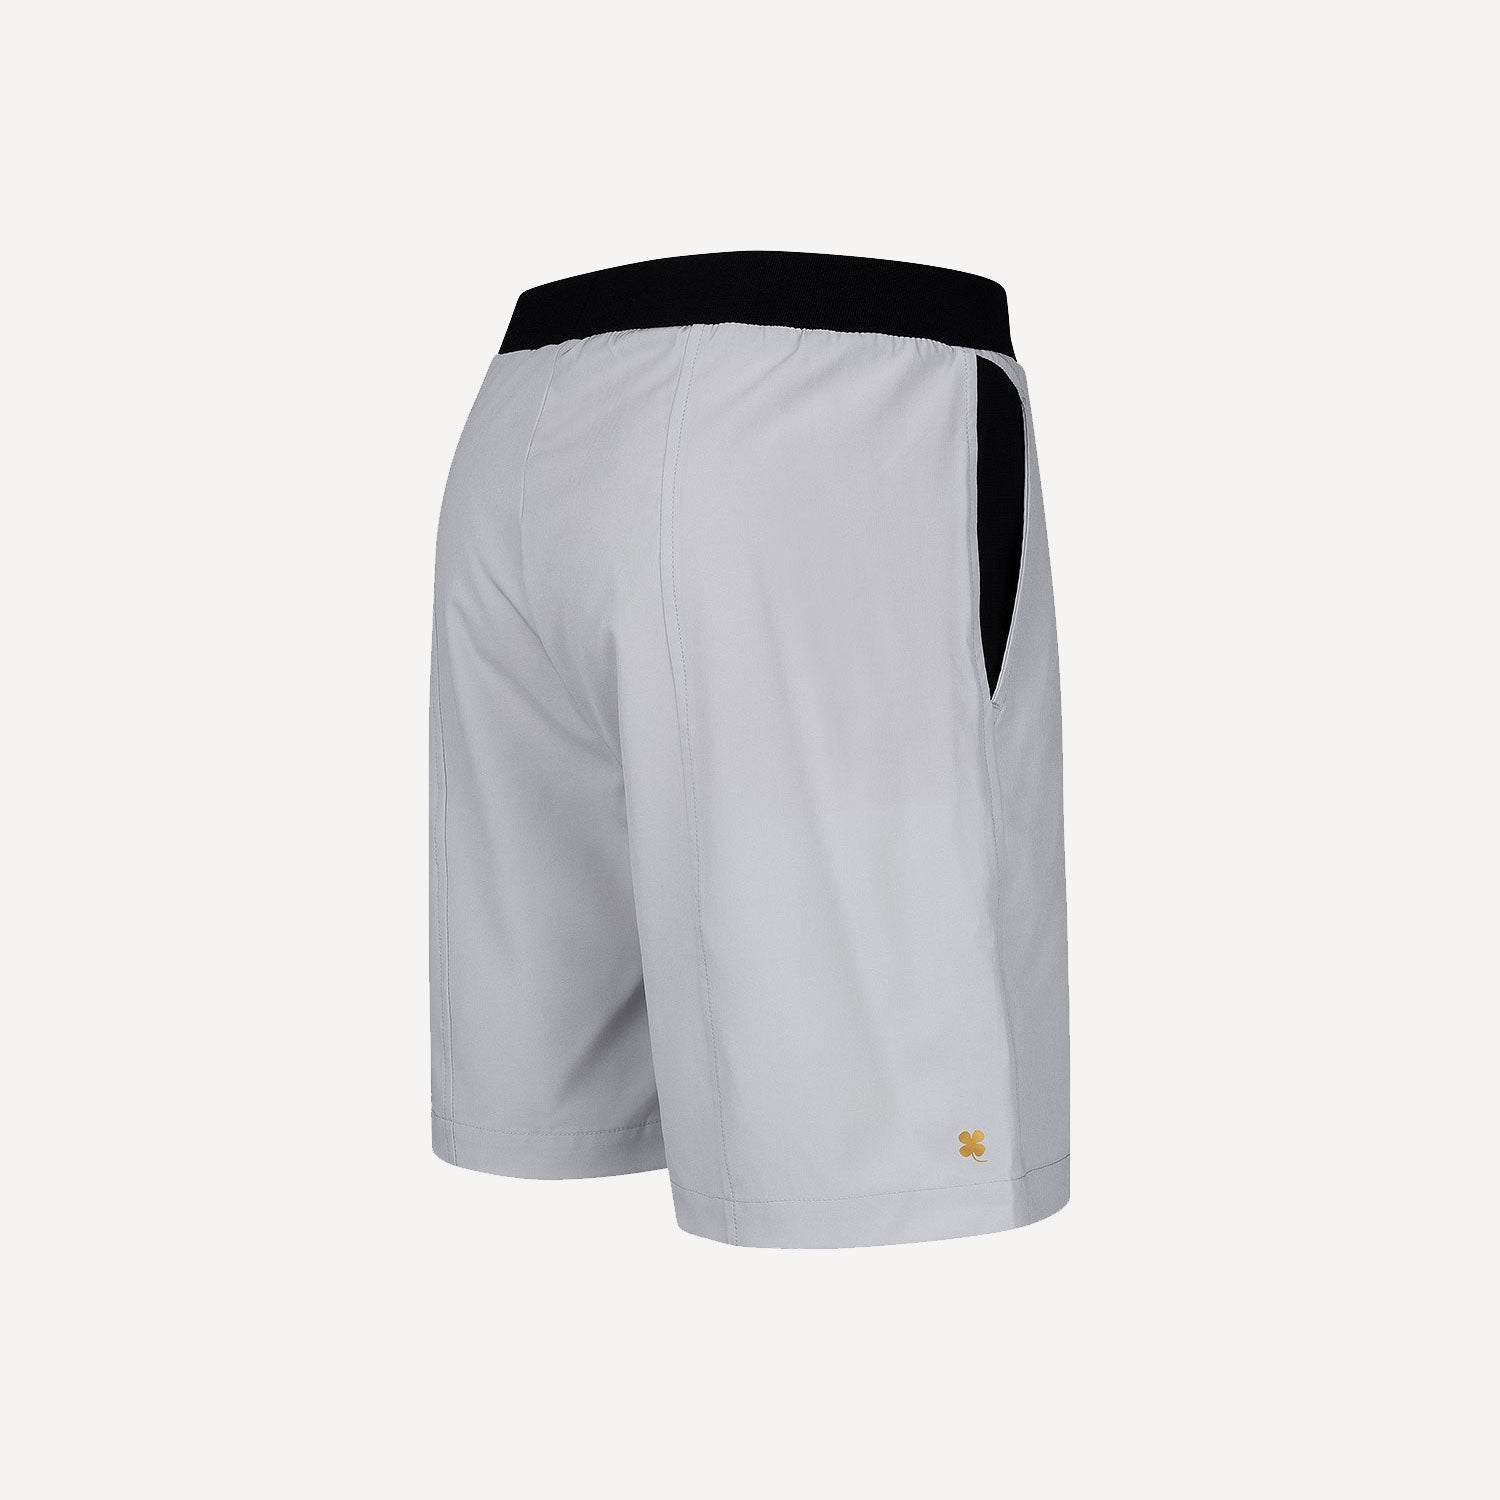 Robey Ace Men's Tennis Shorts - Grey (4)